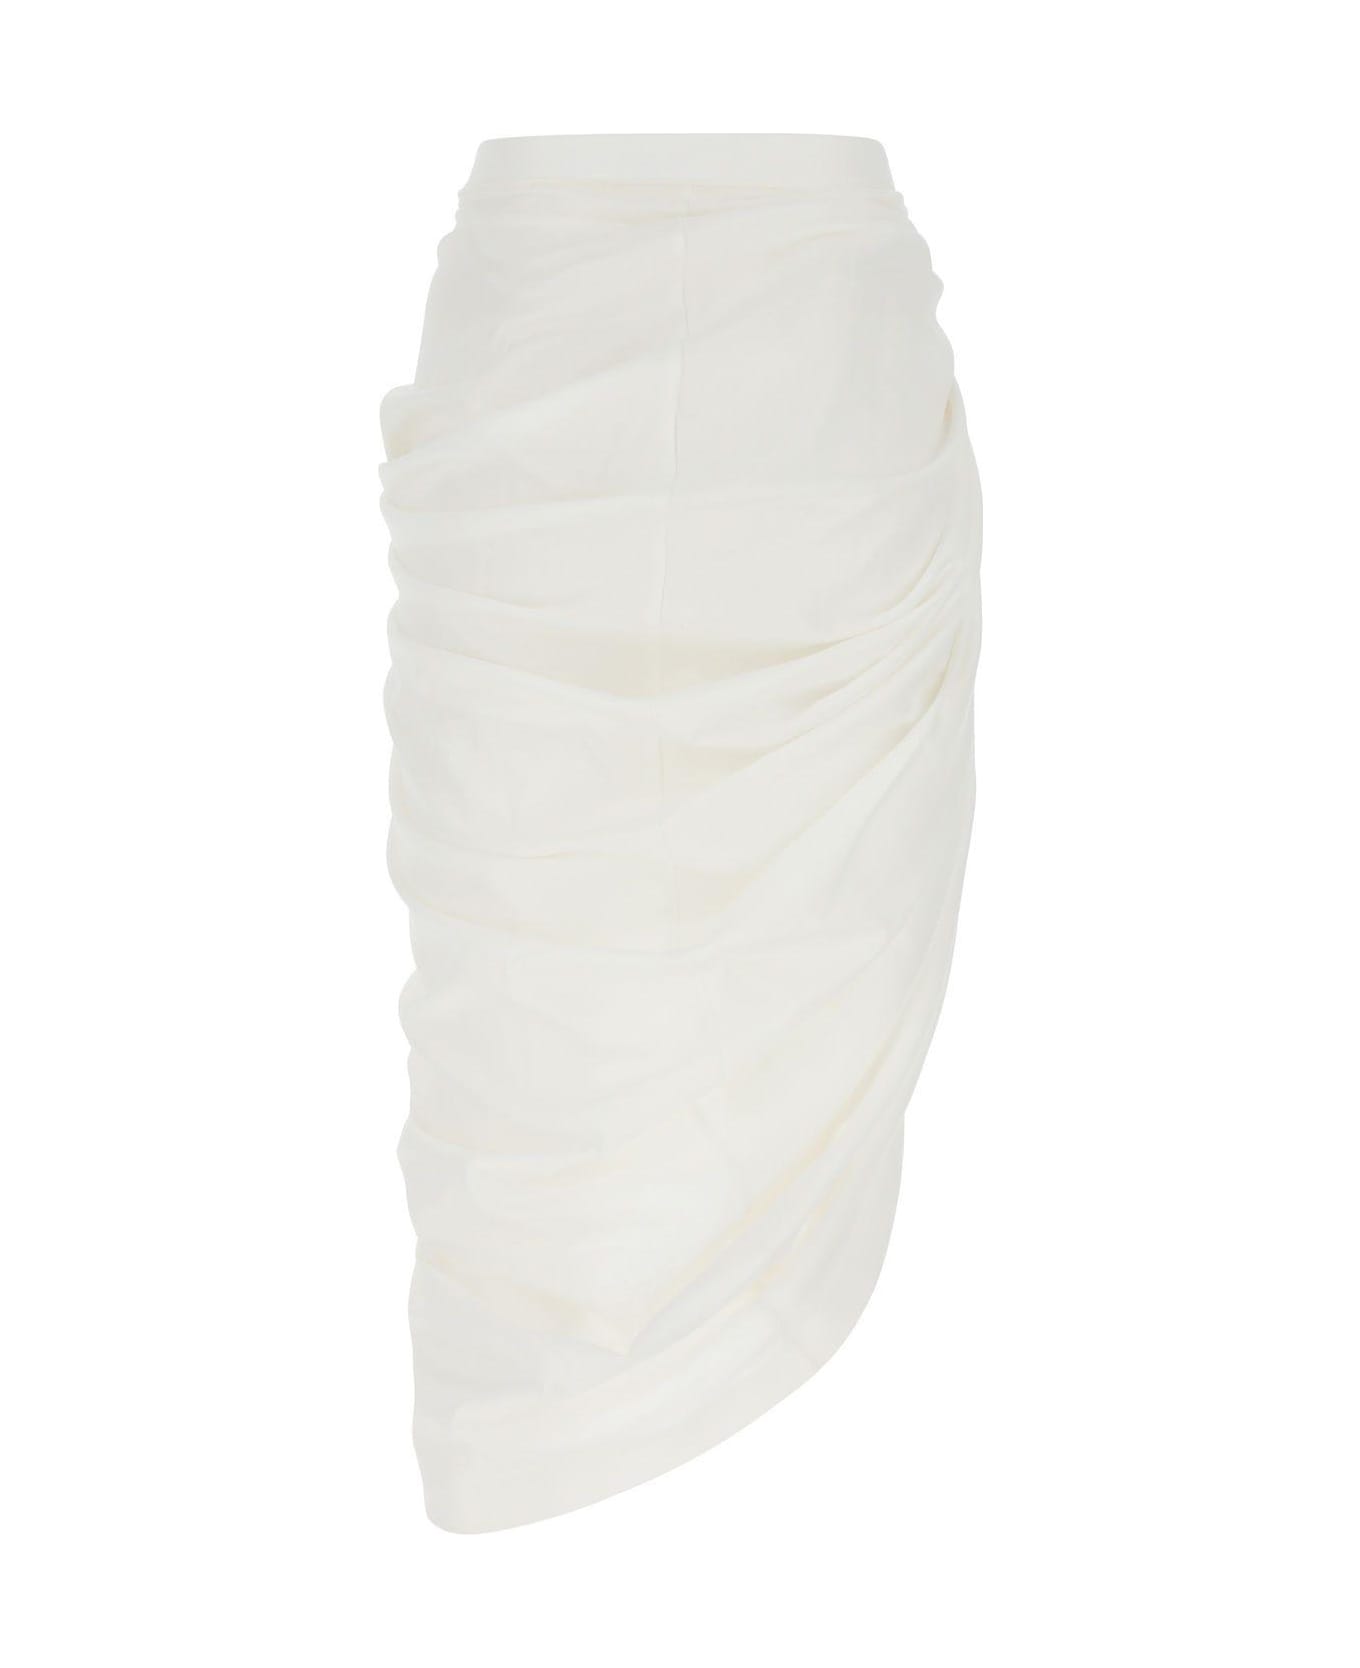 Alexander Wang White Cotton Skirt - Off White